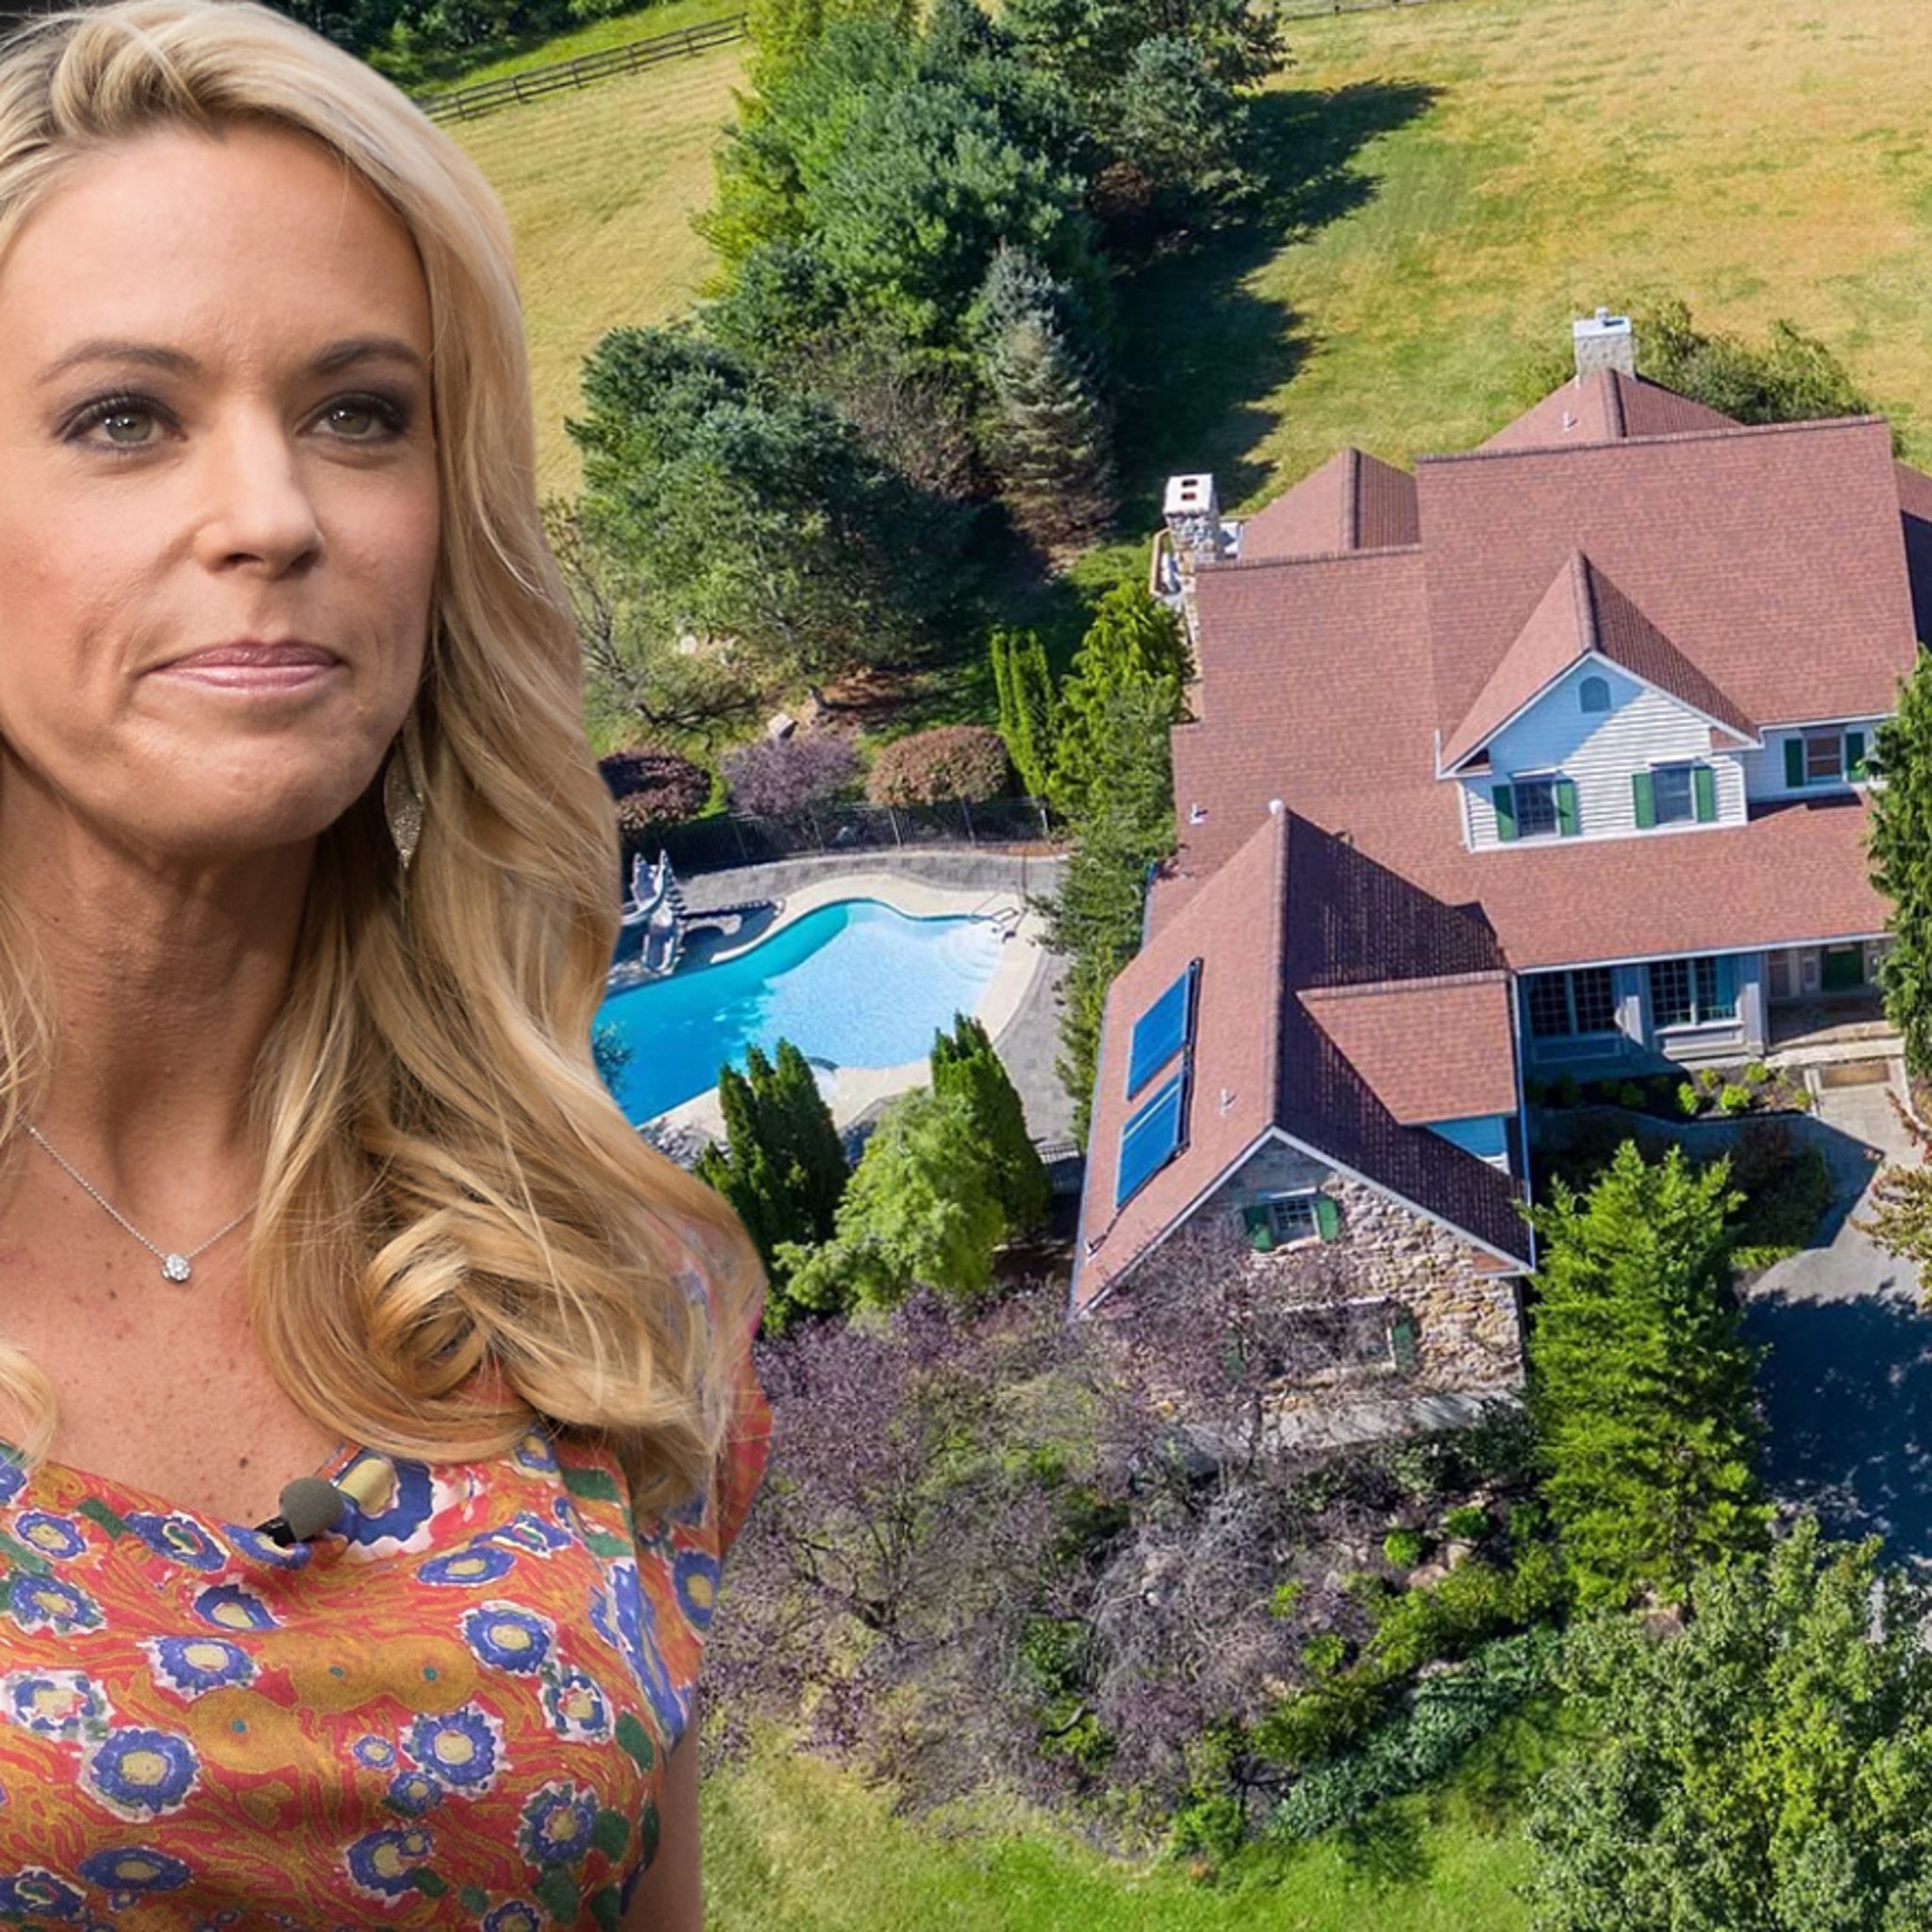 pakke marmorering Ledningsevne Kate Gosselin Sells Home Featured in Reality Show for $1.3 Million